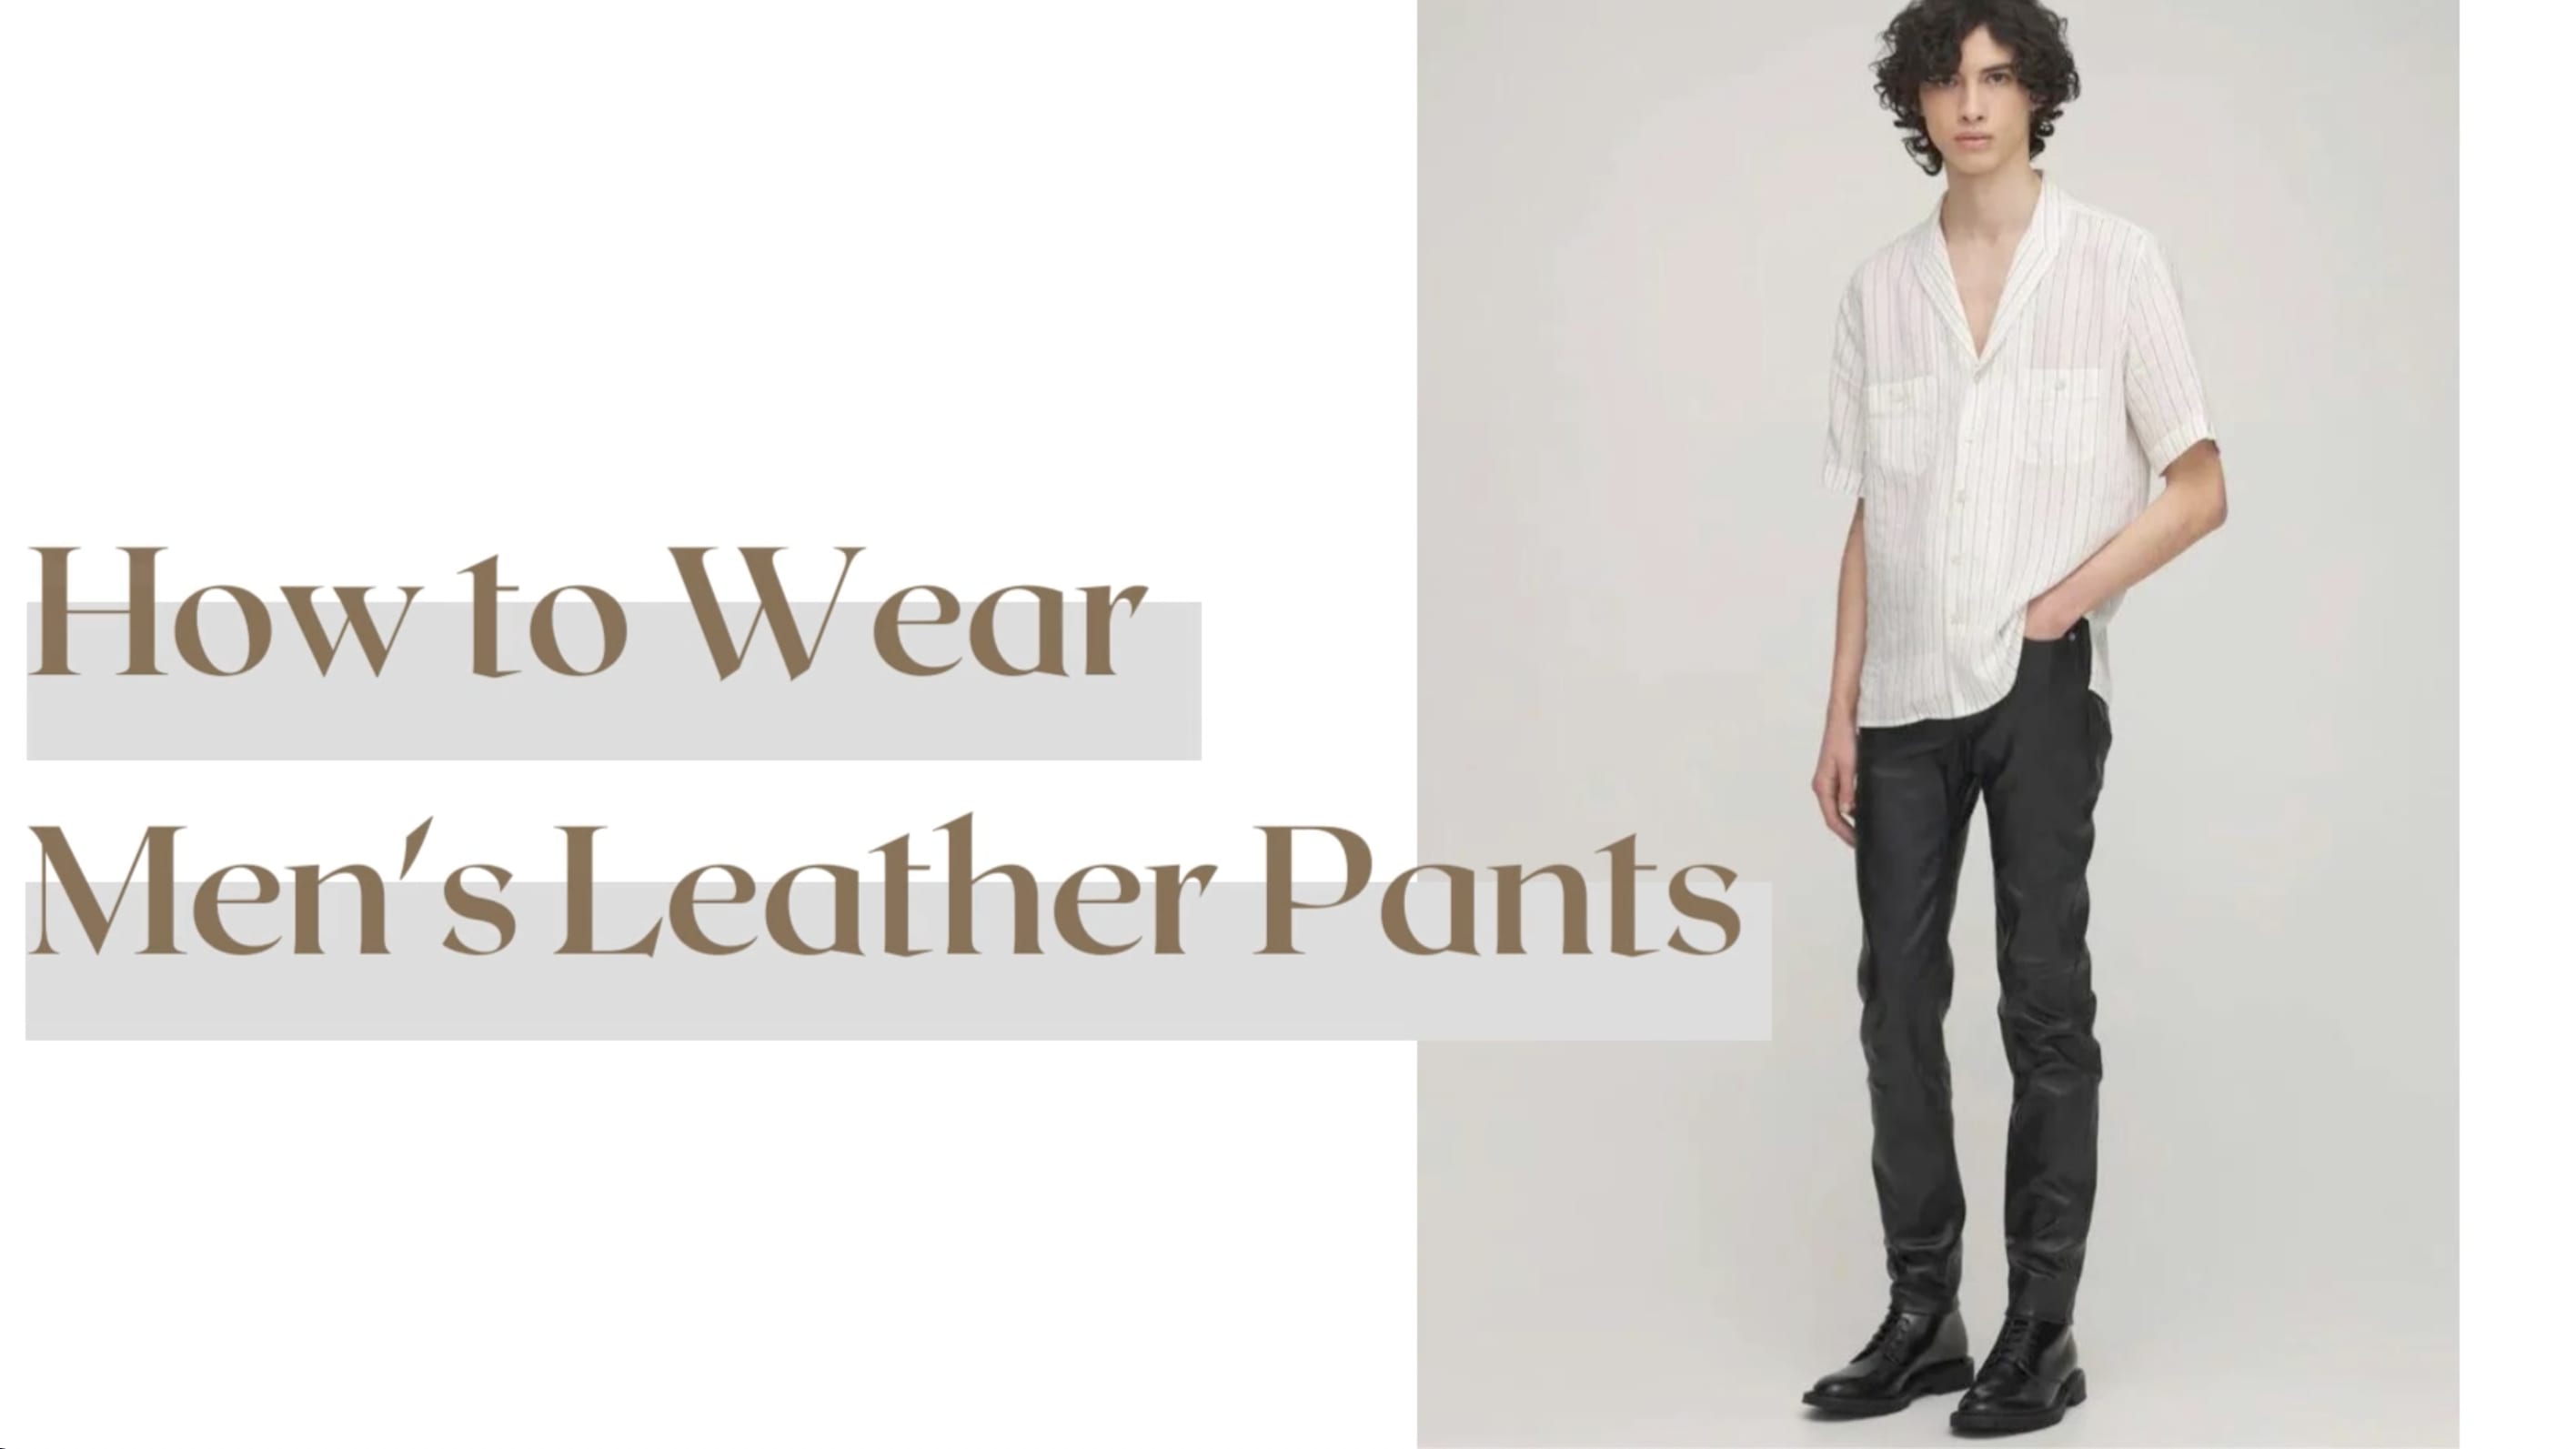 FFS Leather Trousers For Men Is The Next Big Legwear Trend  FashionBeans